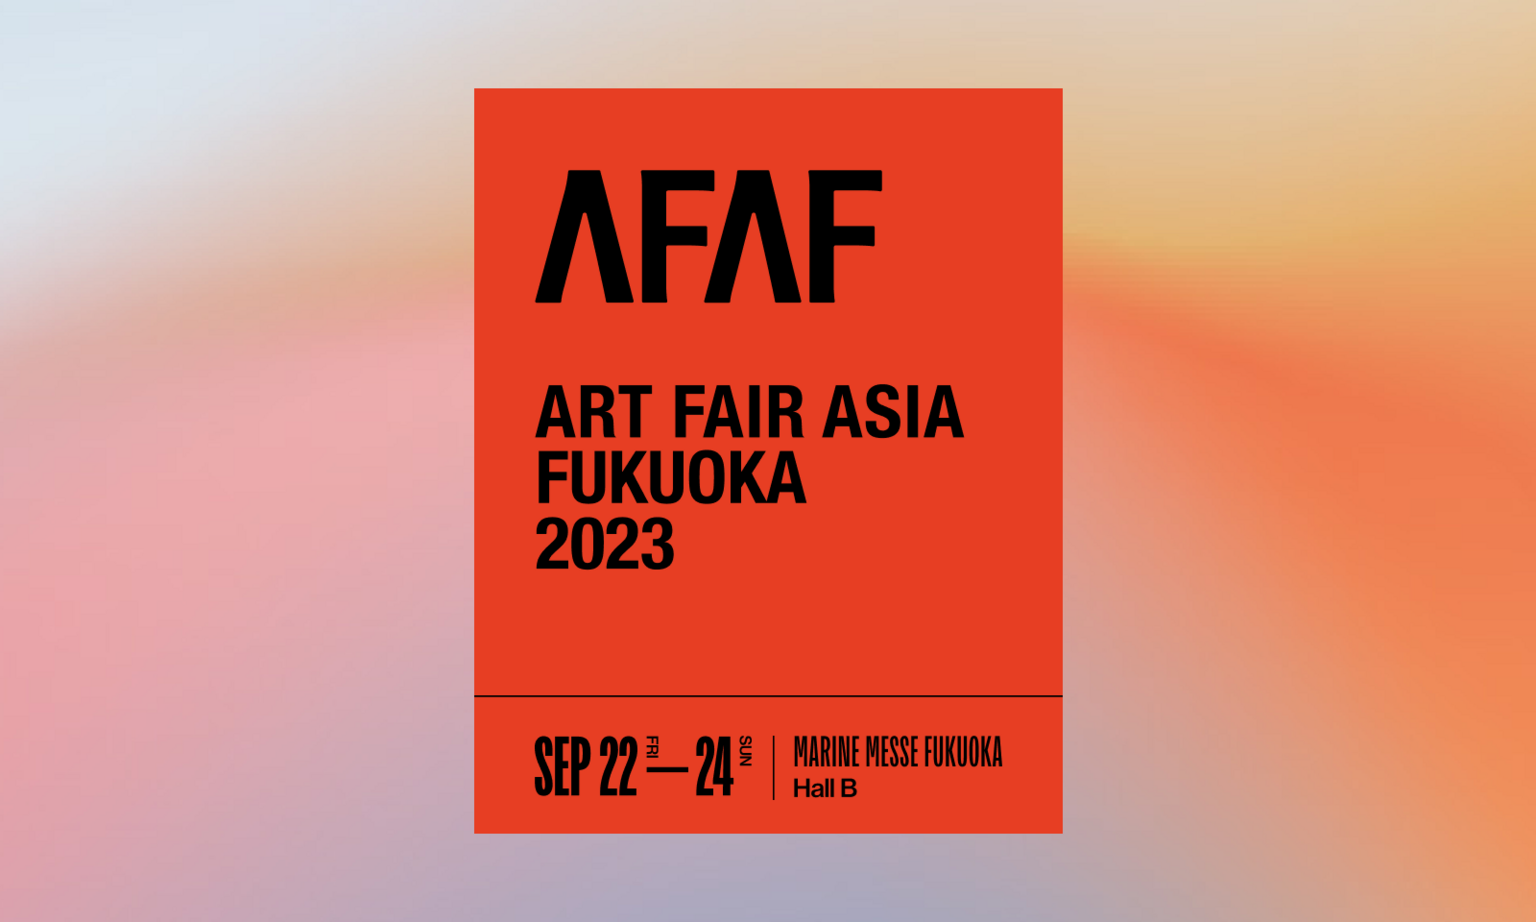 ART FAIR ASIA FUKUOKA 2023 Art Fairs TEZUKAYAMA GALLERY